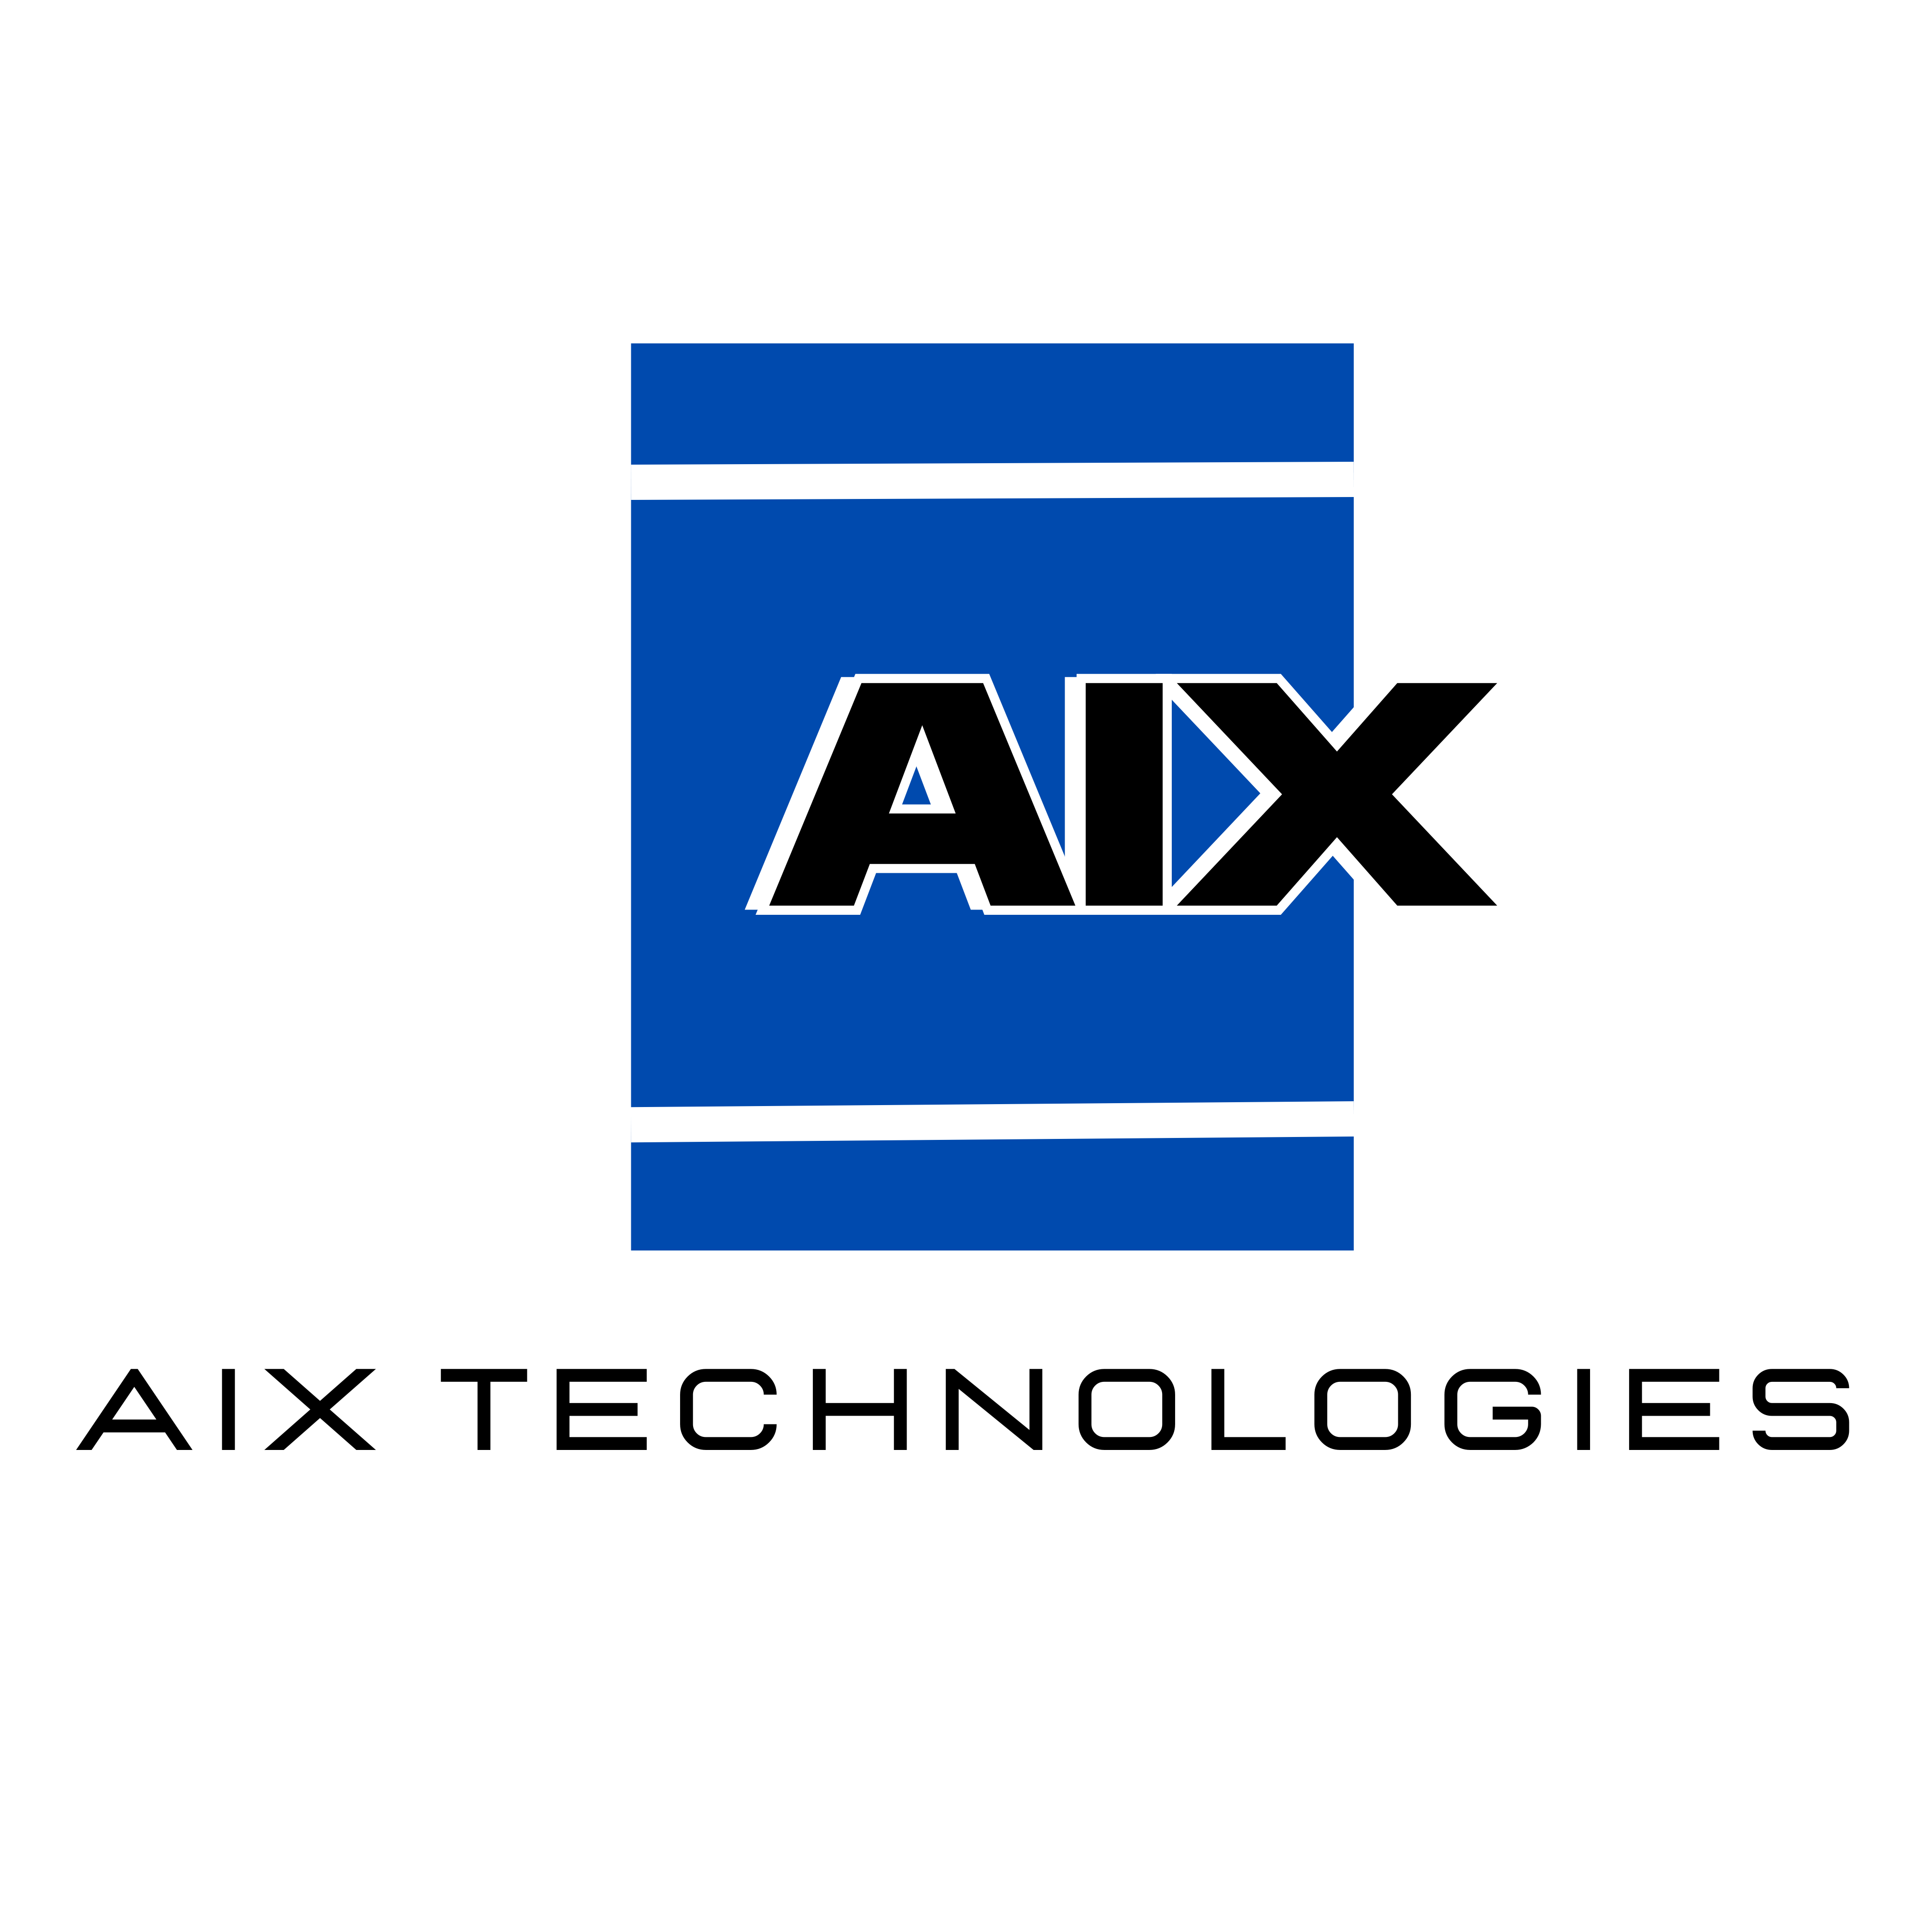 Aix Technologies